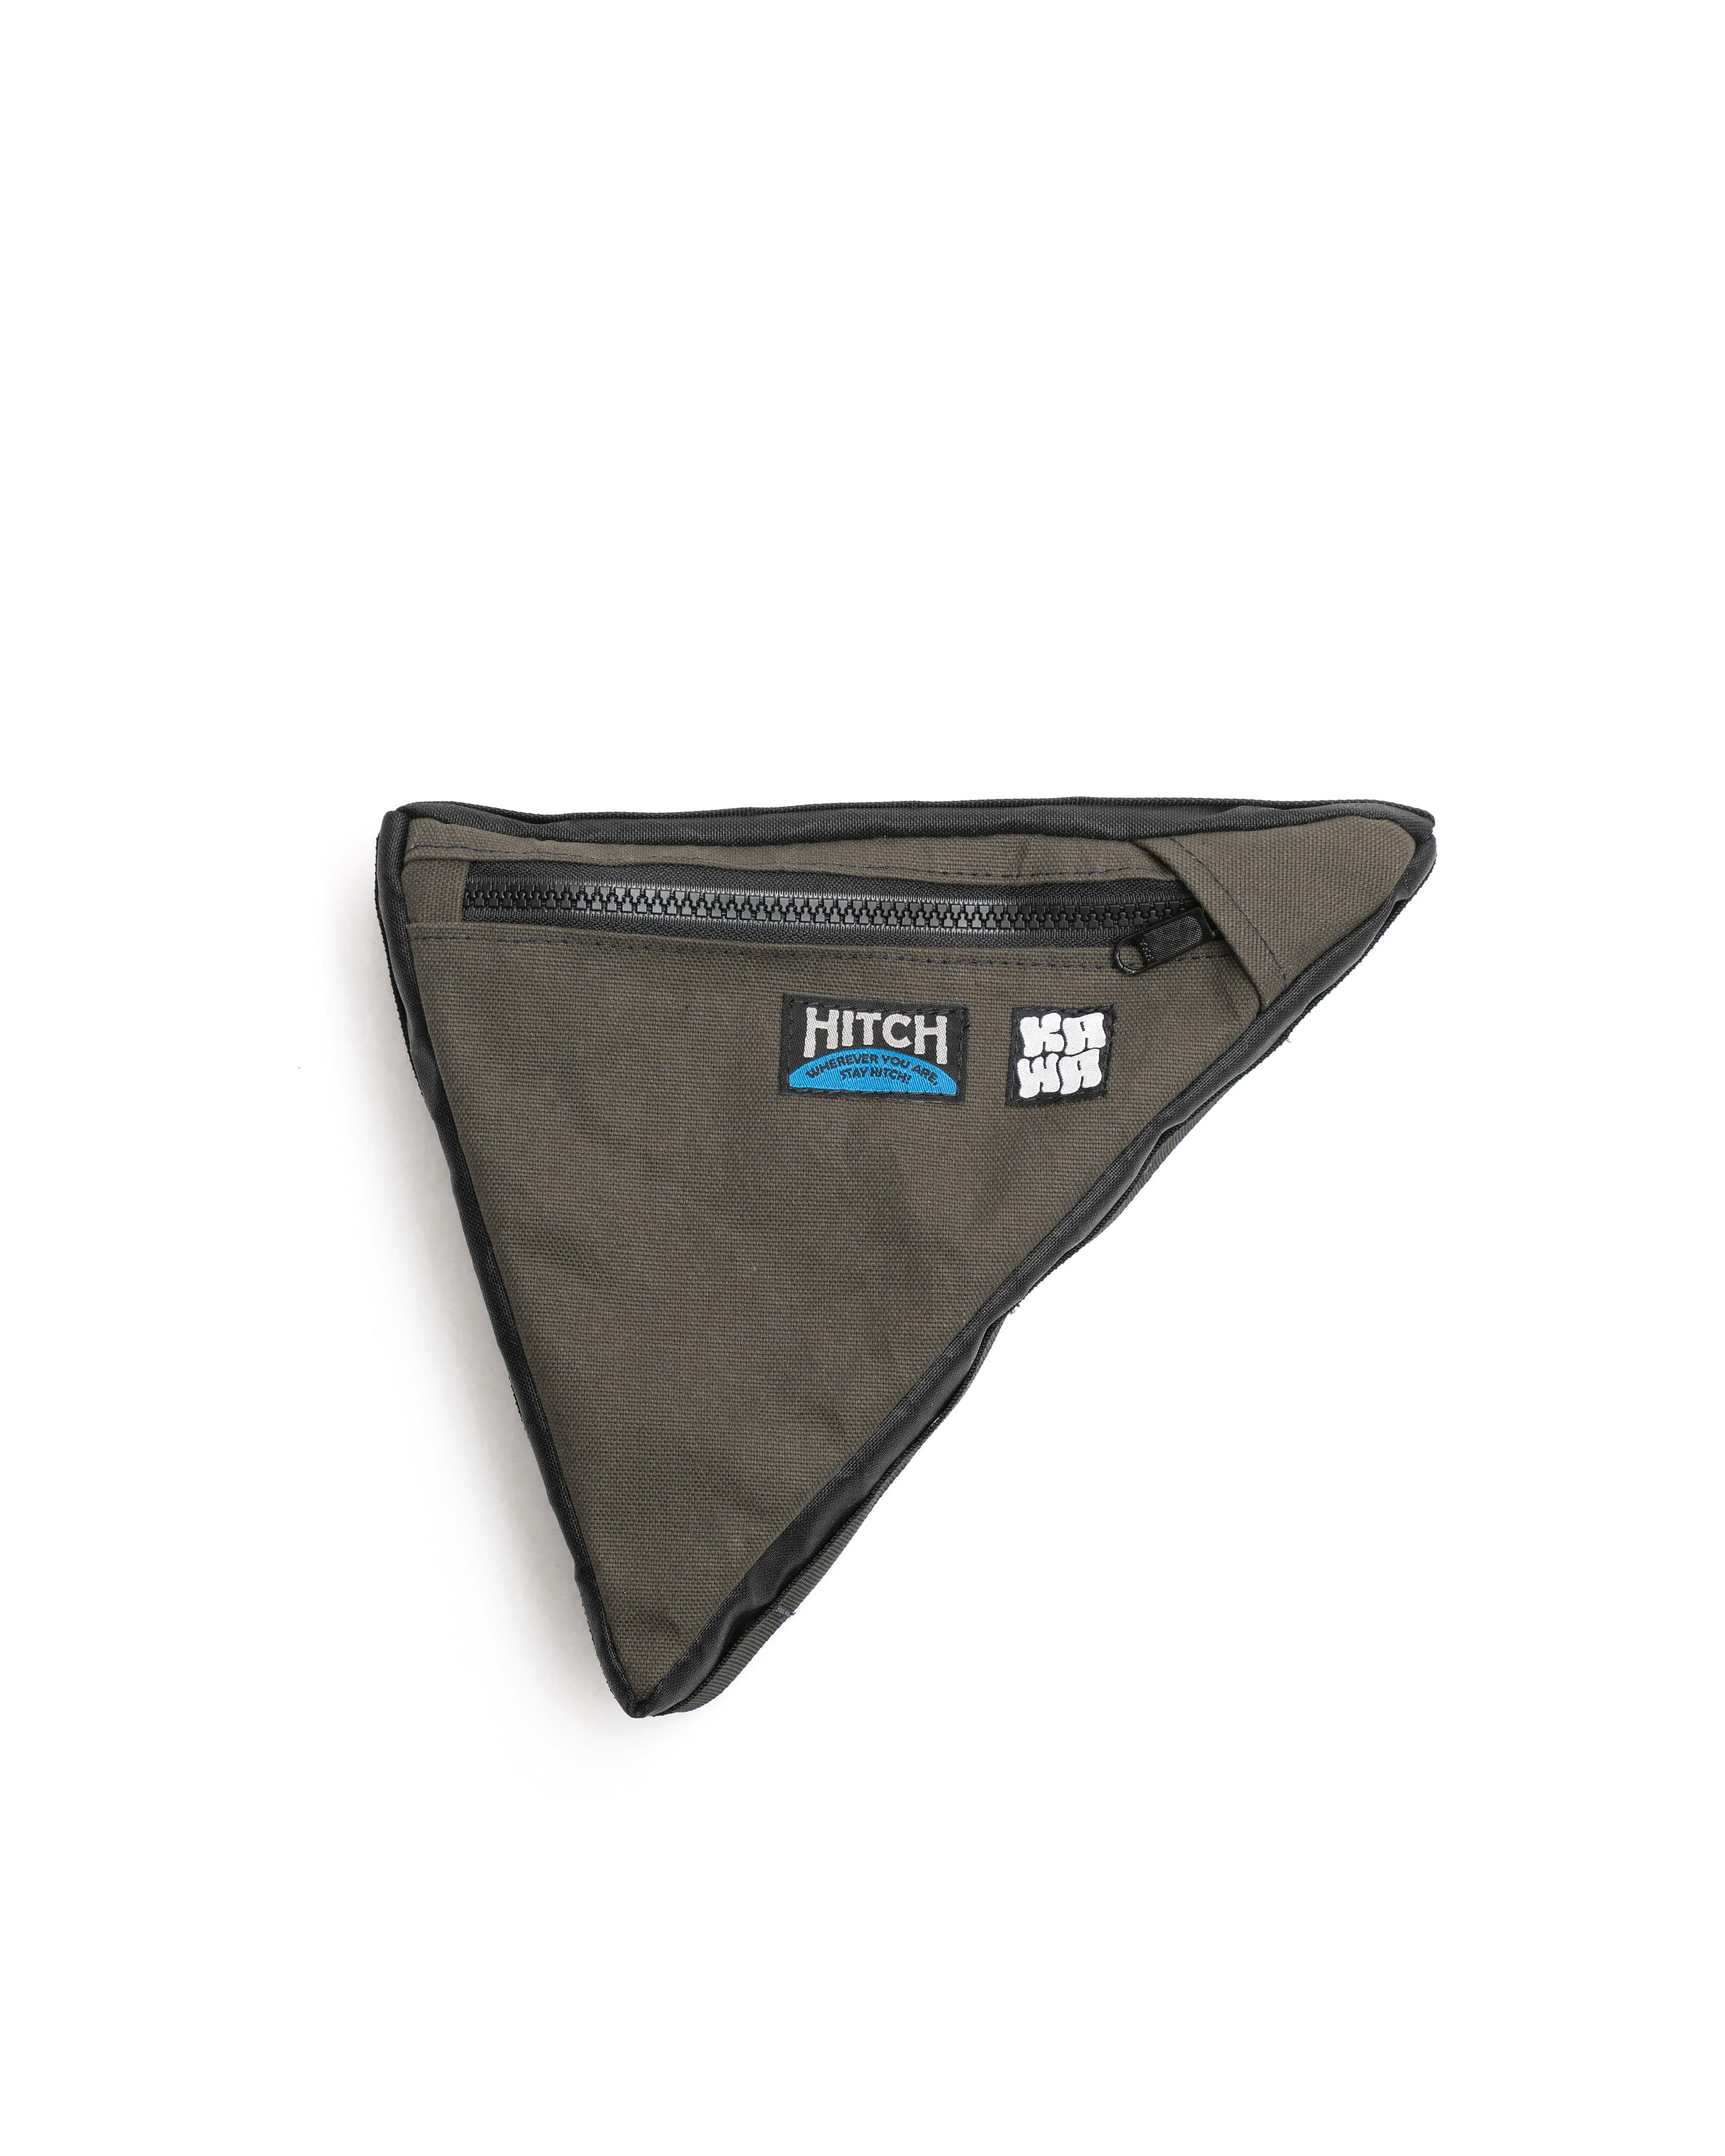 [out of stock] HITCHKAWA Small frame bag (X11)